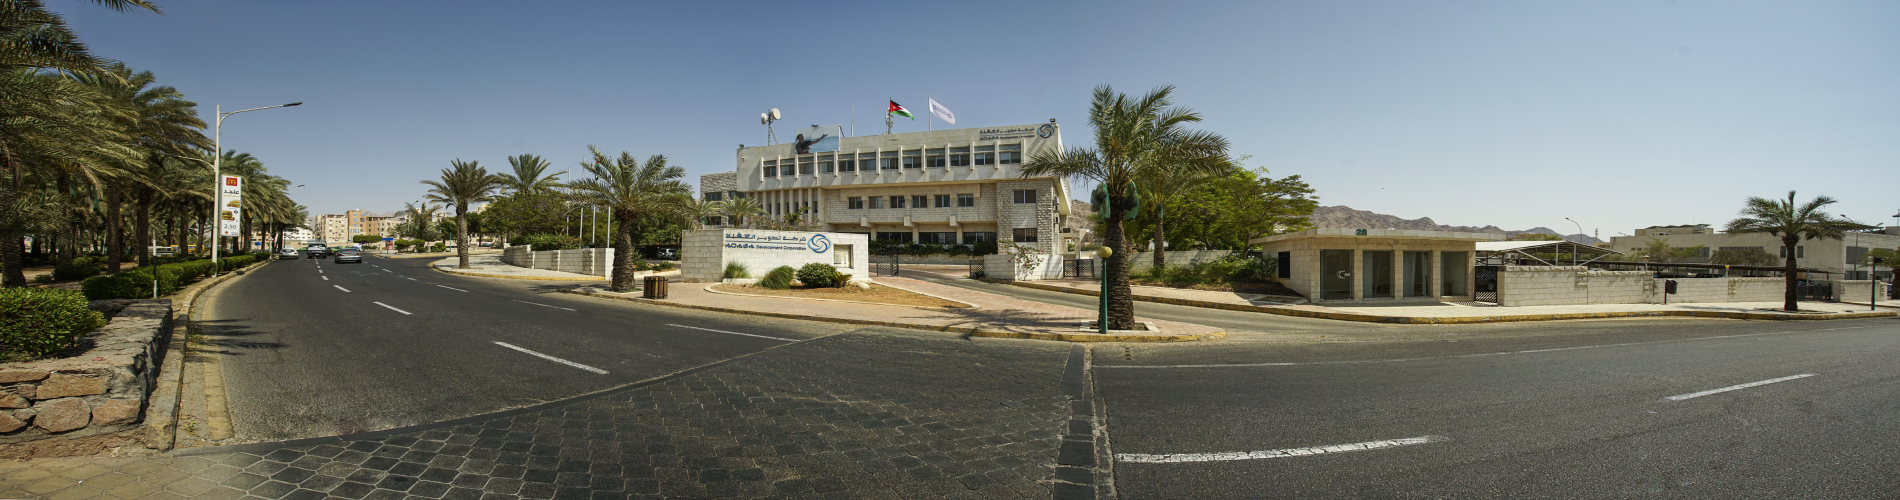 Aqaba Ports Community Development